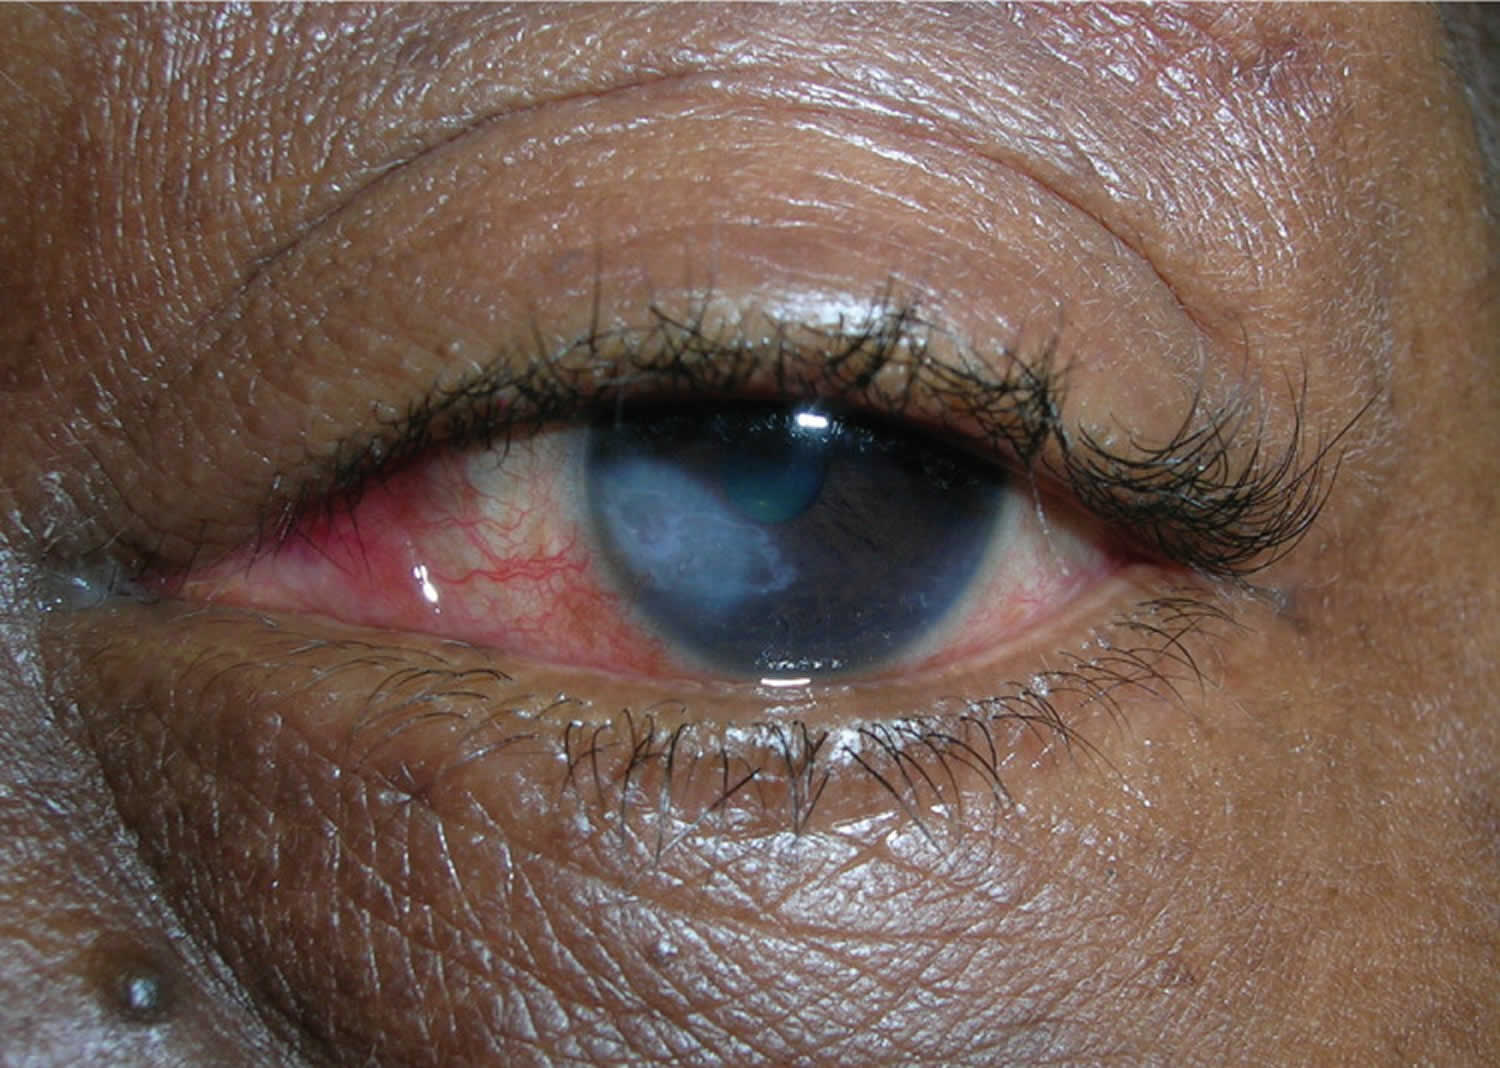 Herpetic keratitis with corneal scarring